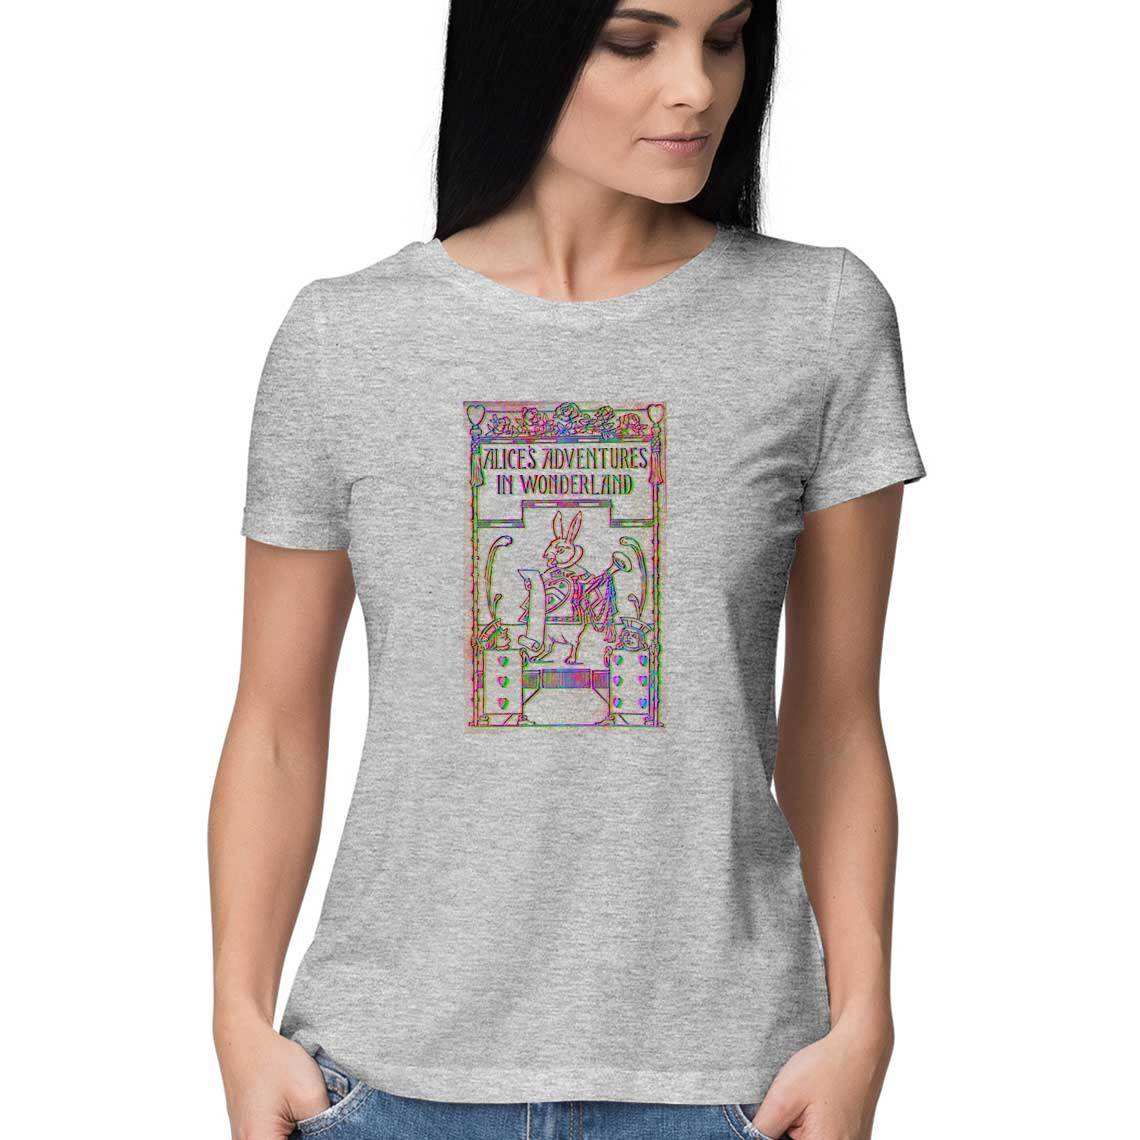 The Best T-Shirts - Alice's Adventure's in Wonderland Women's T-Shirts - CBD Store India